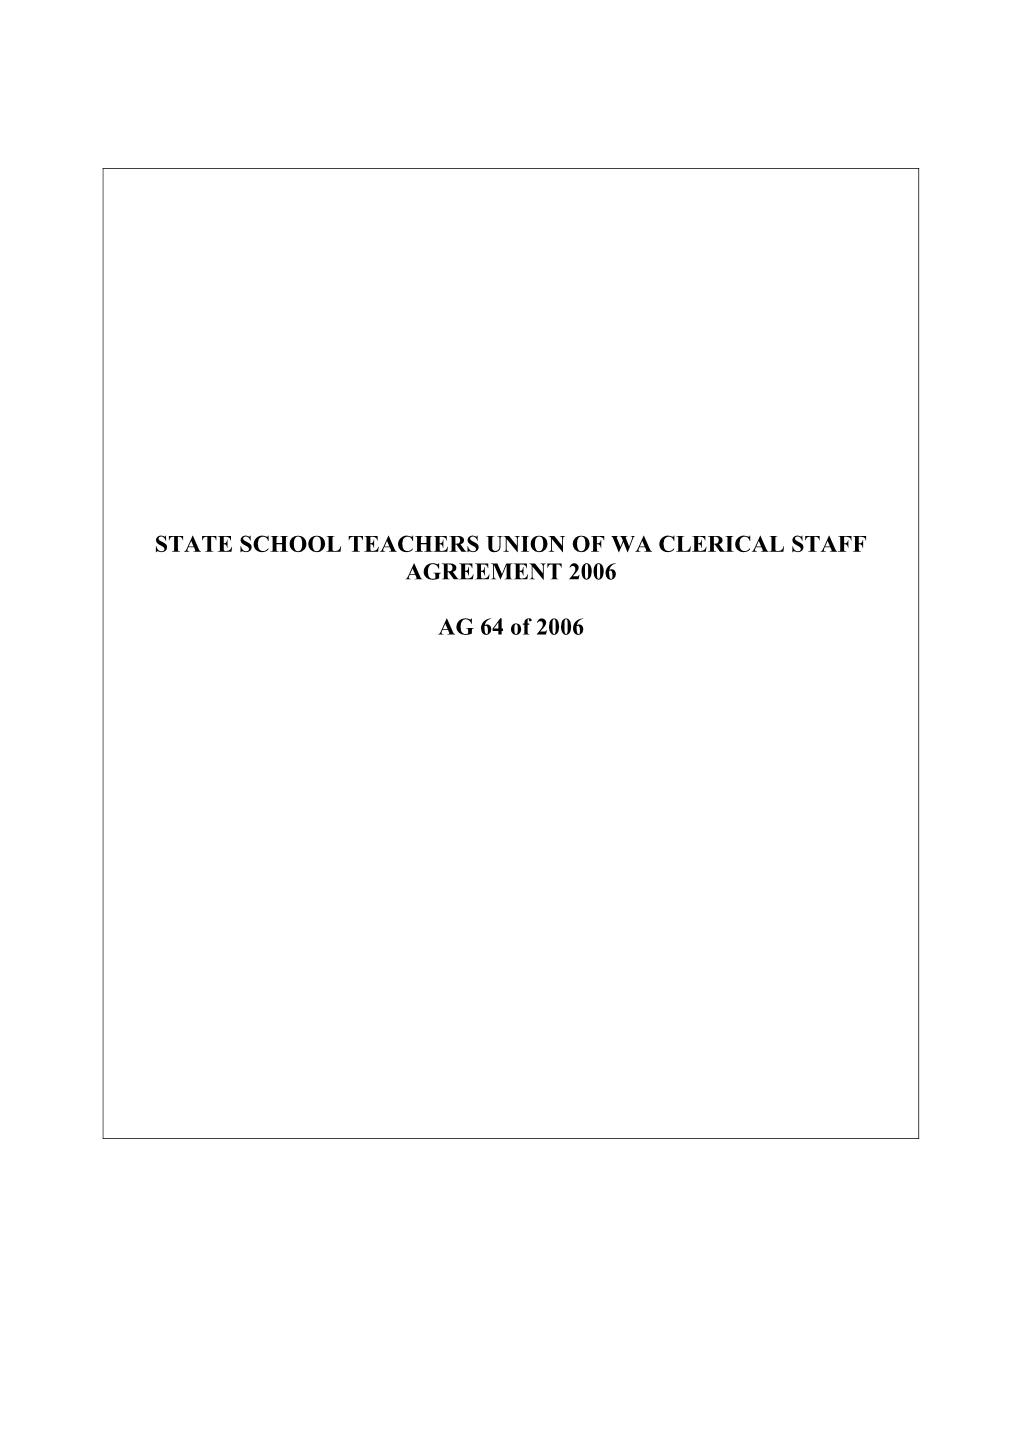 State School Teachers Union of WA Clerical Staff Agreement 2006 200605445 STA033